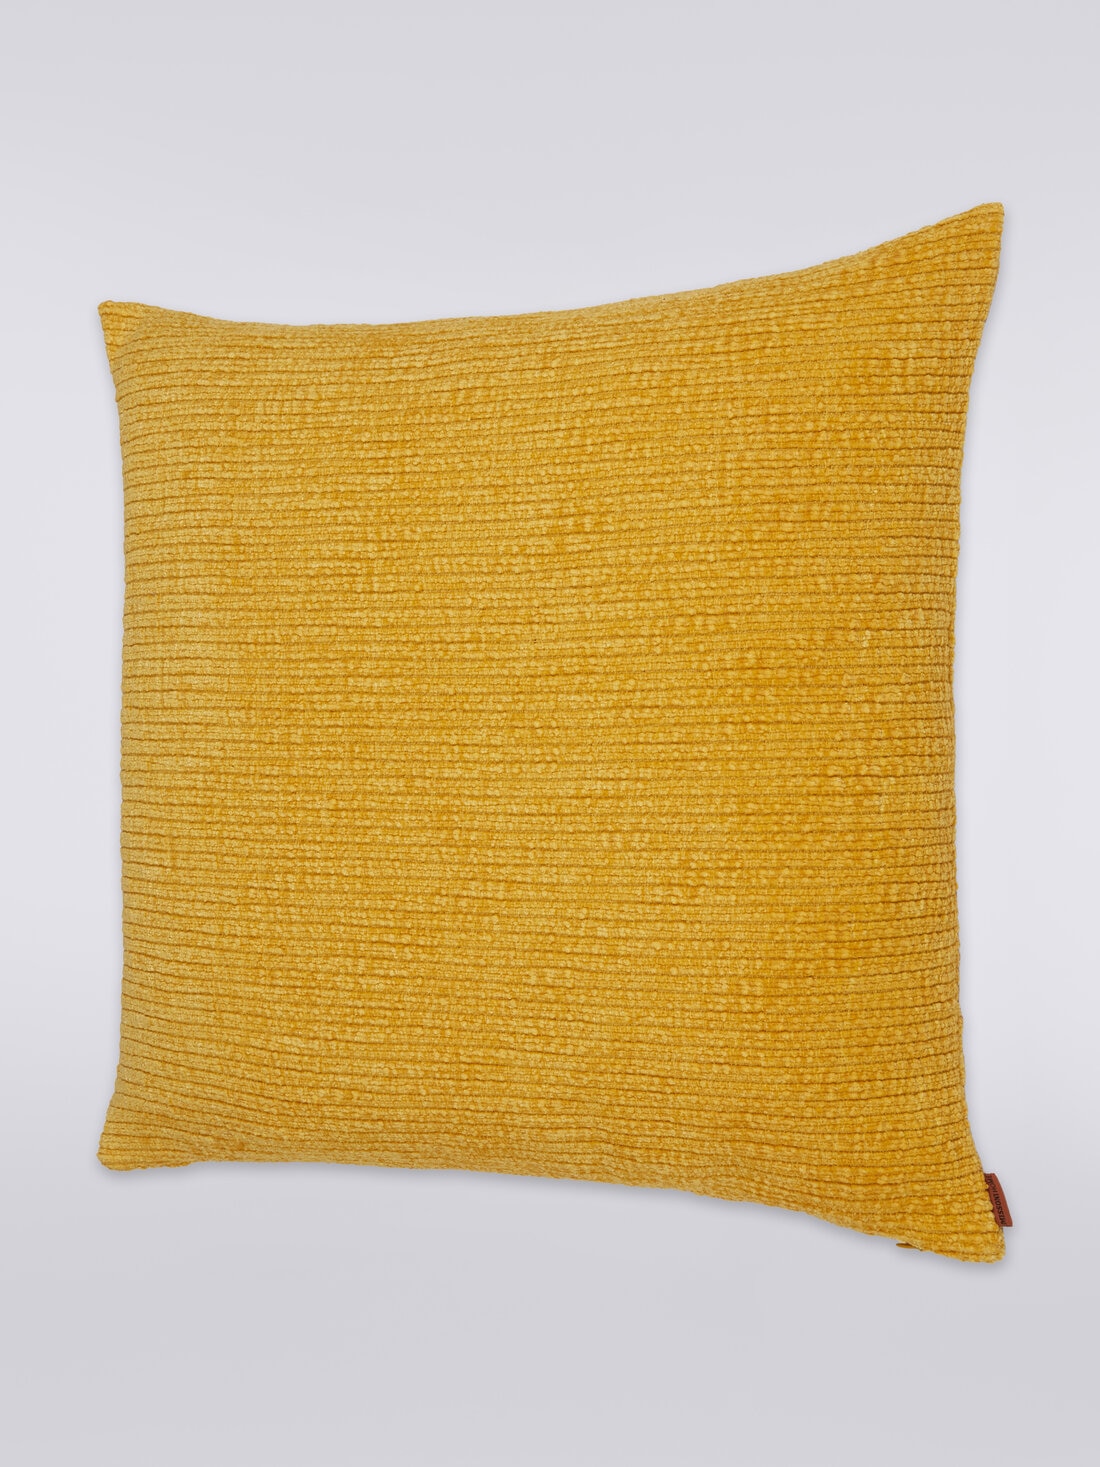 Baracoa cushion 60x60 cm, Multicoloured  - 8051275608257 - 1